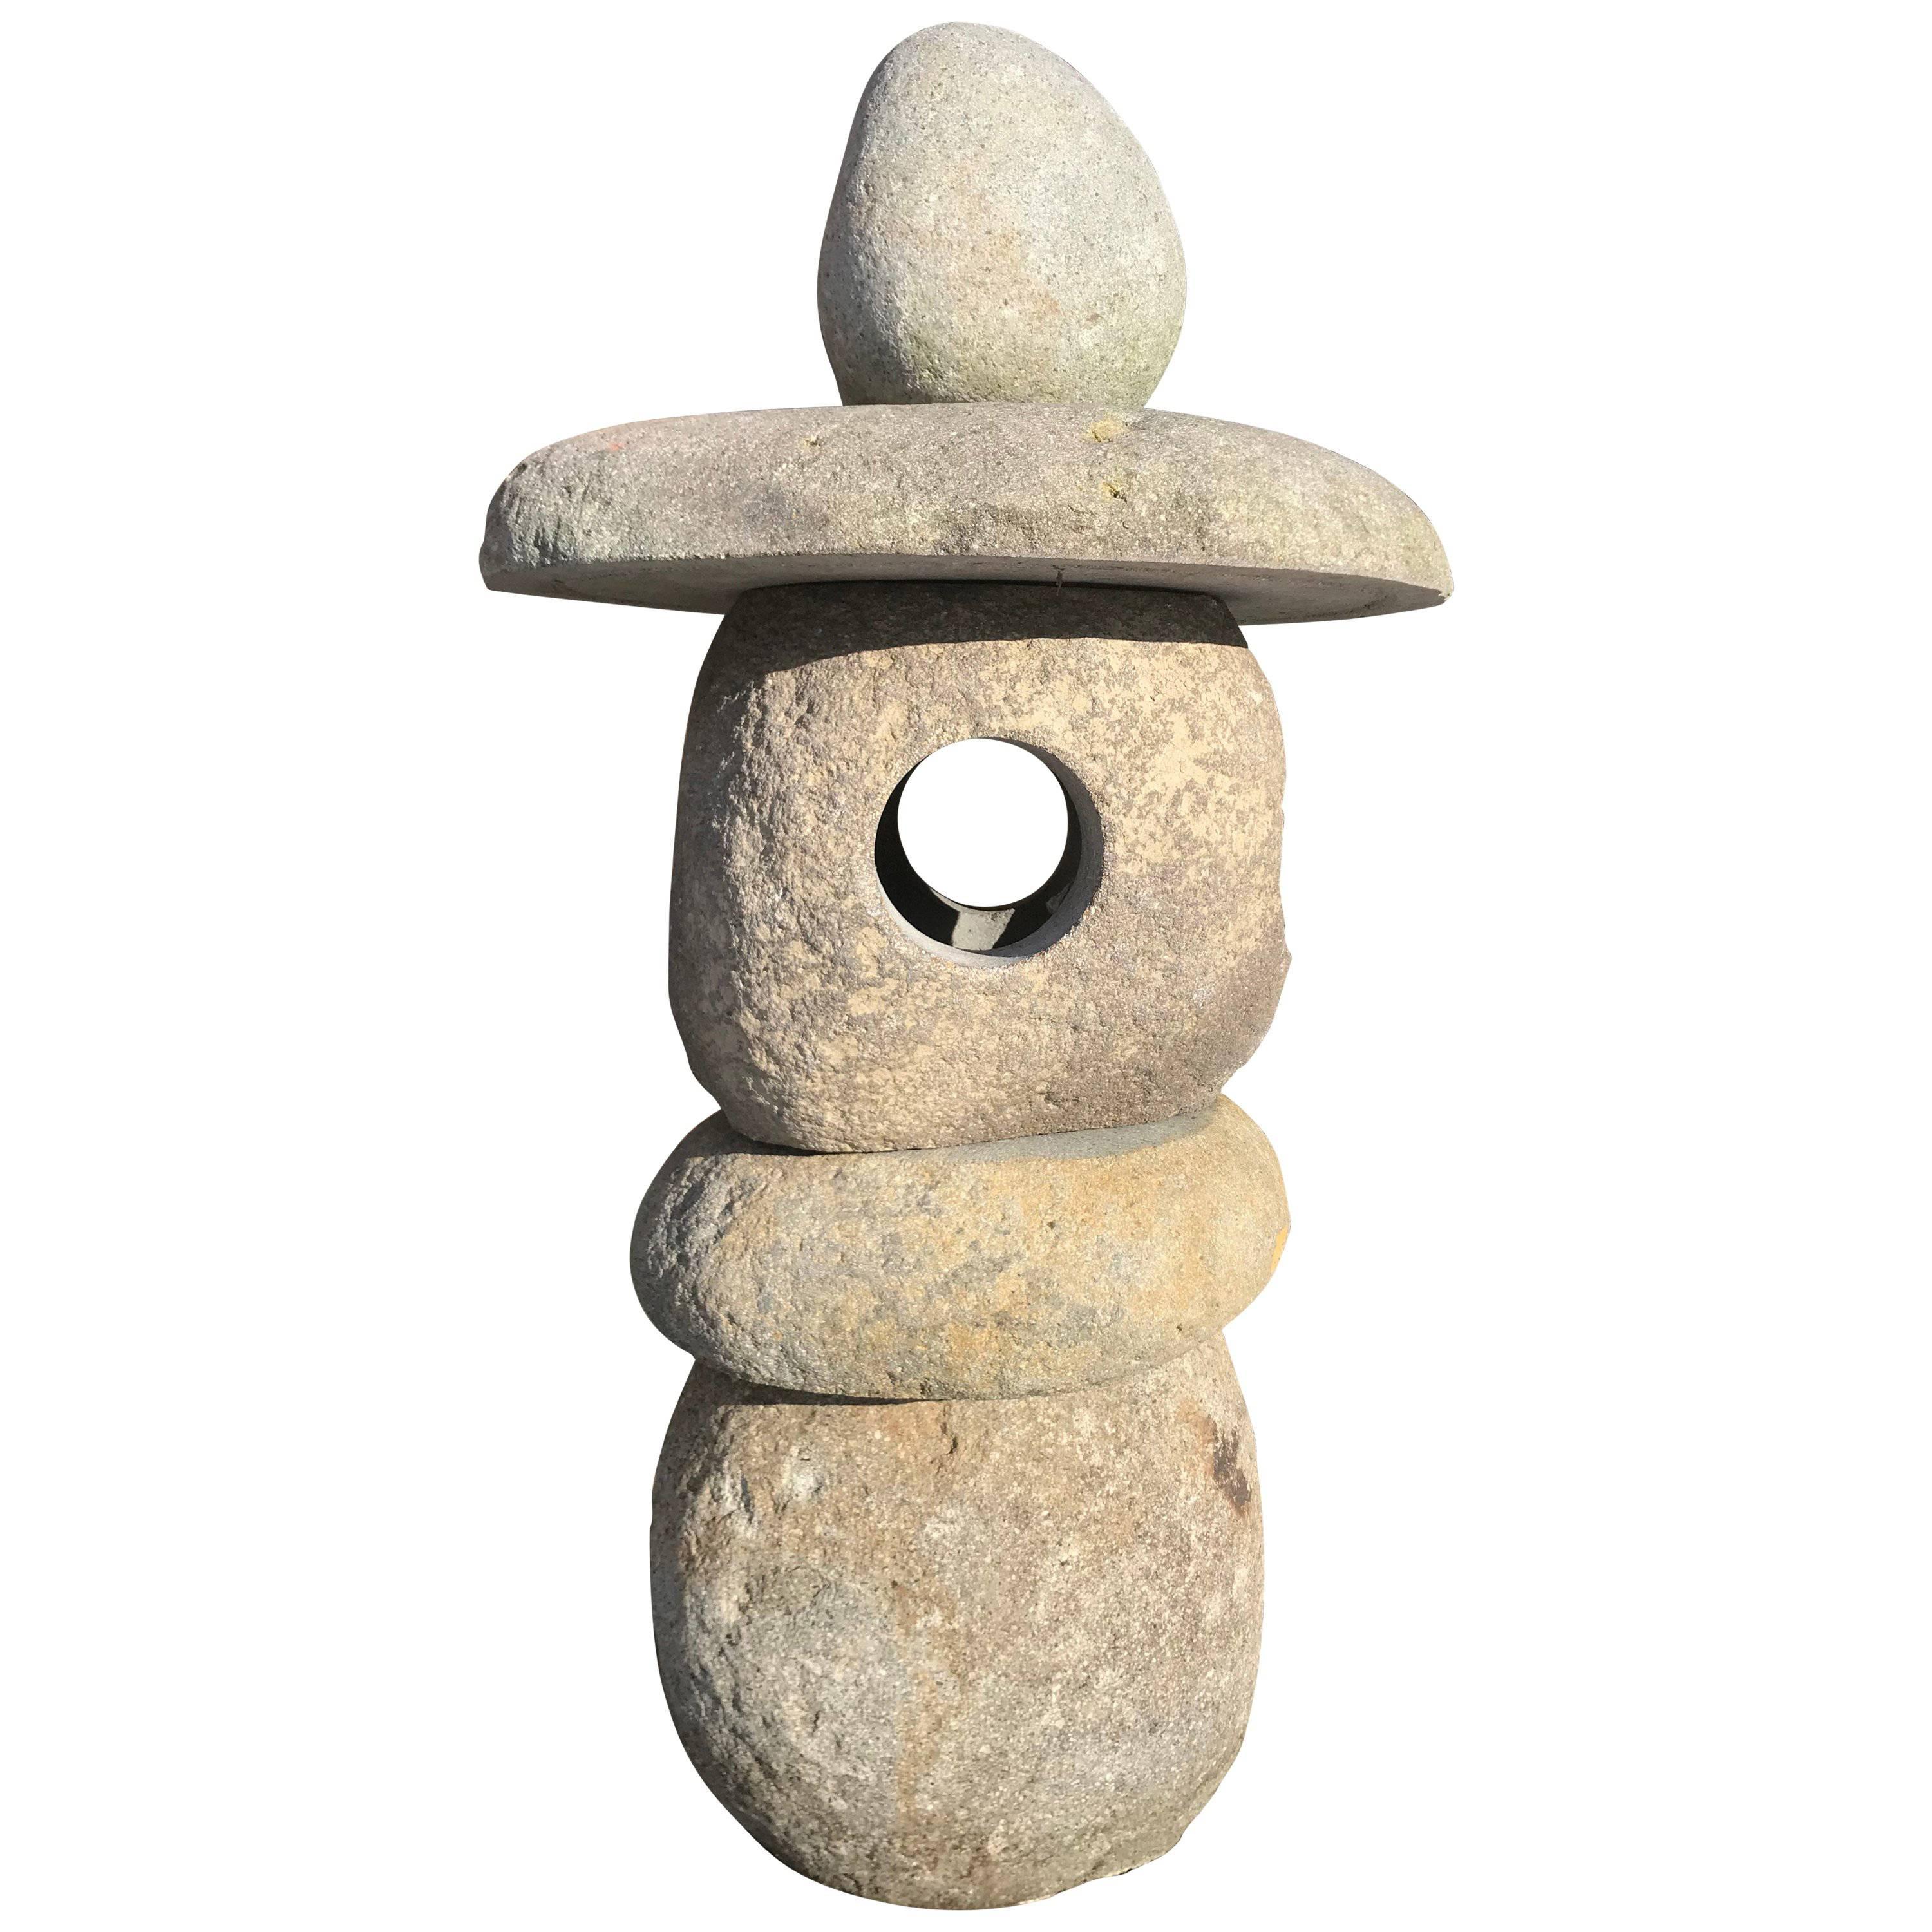 Japan Natural Stone Spirit Lantern Hand-Carved Natural Boulders